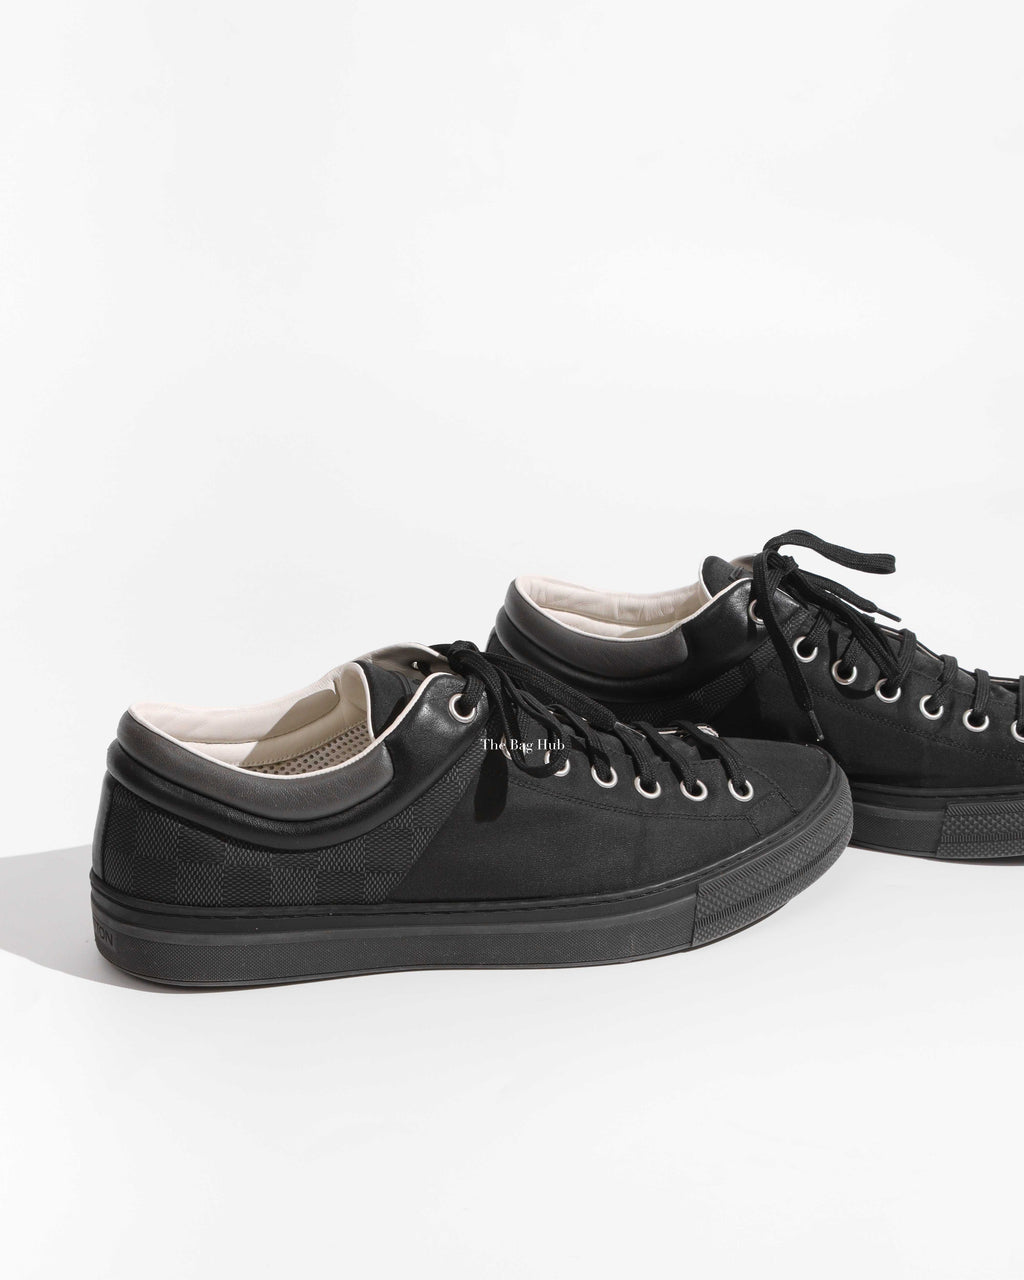 Louis Vuitton Damier Graphite Nylon Men's Sneakers Size 10-1